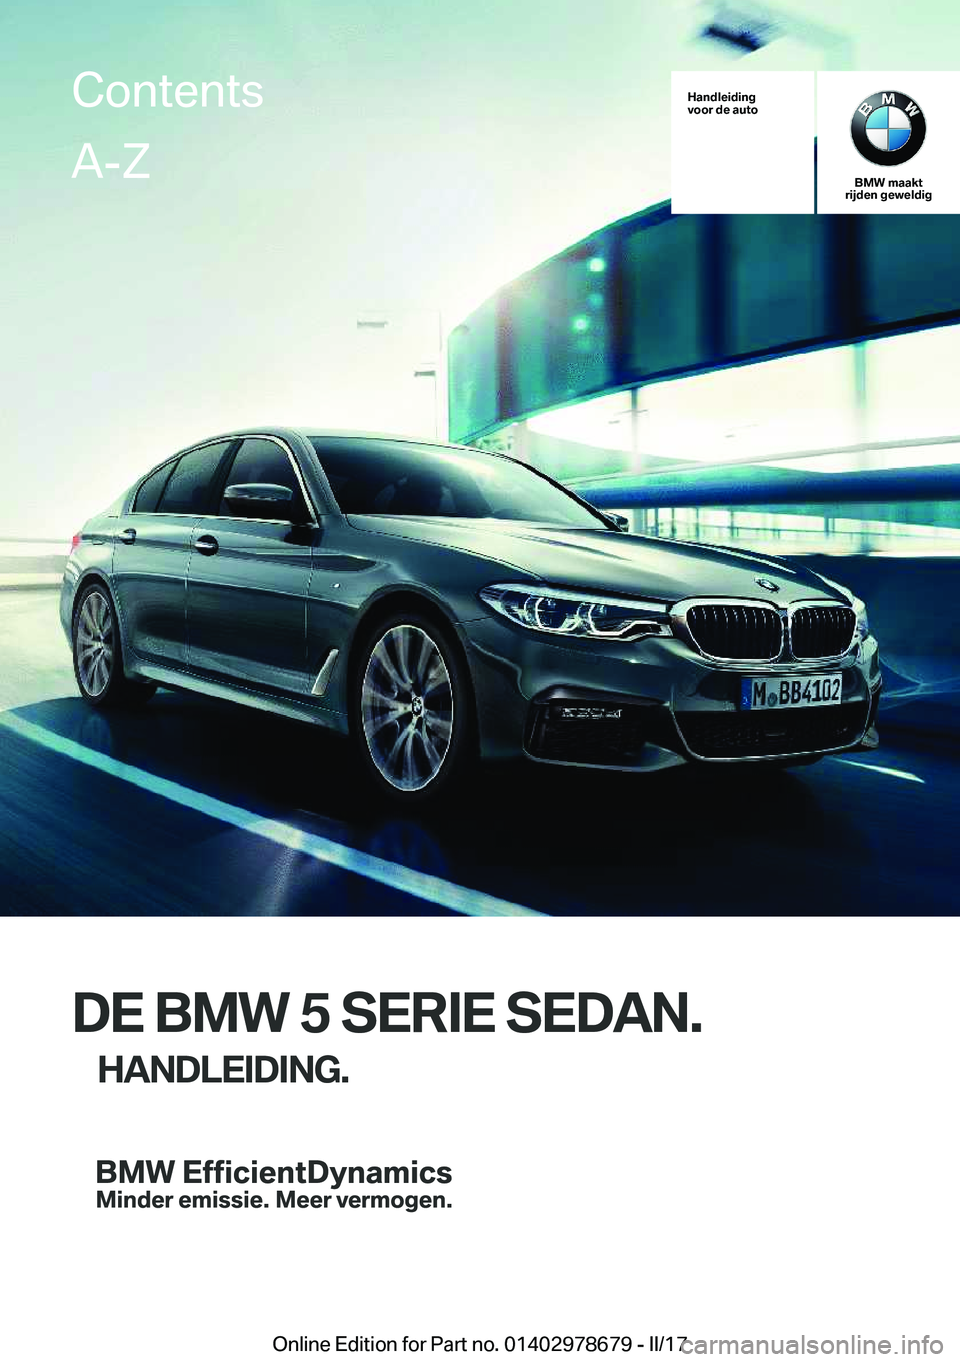 BMW 5 SERIES 2017  Instructieboekjes (in Dutch) �H�a�n�d�l�e�i�d�i�n�g
�v�o�o�r��d�e��a�u�t�o
�B�M�W��m�a�a�k�t
�r�i�j�d�e�n��g�e�w�e�l�d�i�g
�D�E��B�M�W��5��S�E�R�I�E��S�E�D�A�N�.
�H�A�N�D�L�E�I�D�I�N�G�.
�C�o�n�t�e�n�t�s�A�-�Z
�O�n�l�i�n�